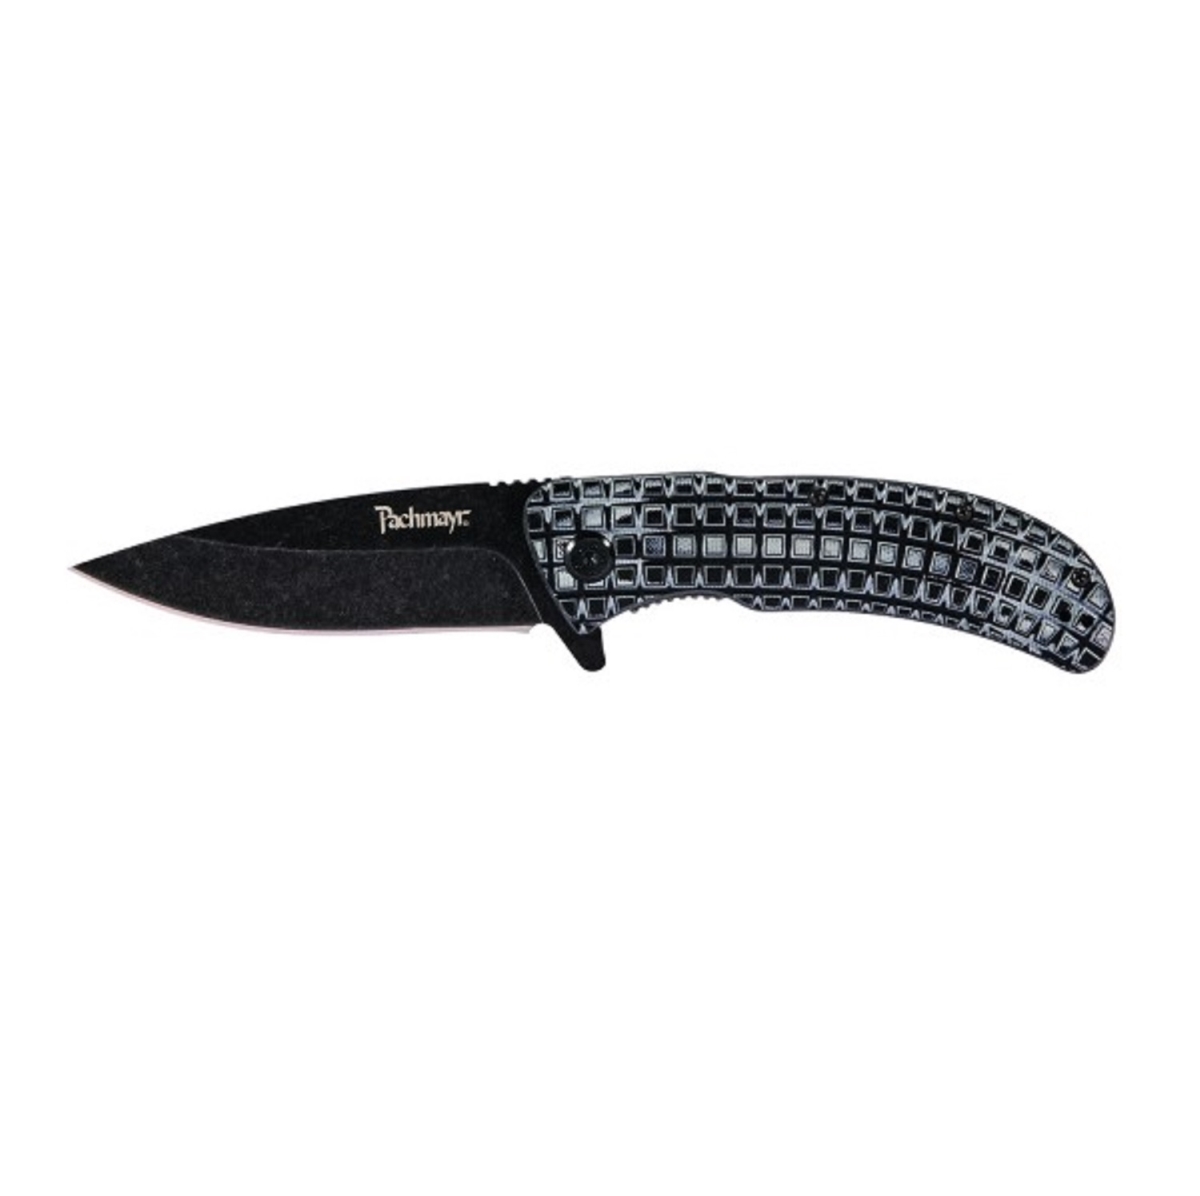 4019395 3.4 In. Grappler Folder Bw Knife Blade With G-10 Handle, Black